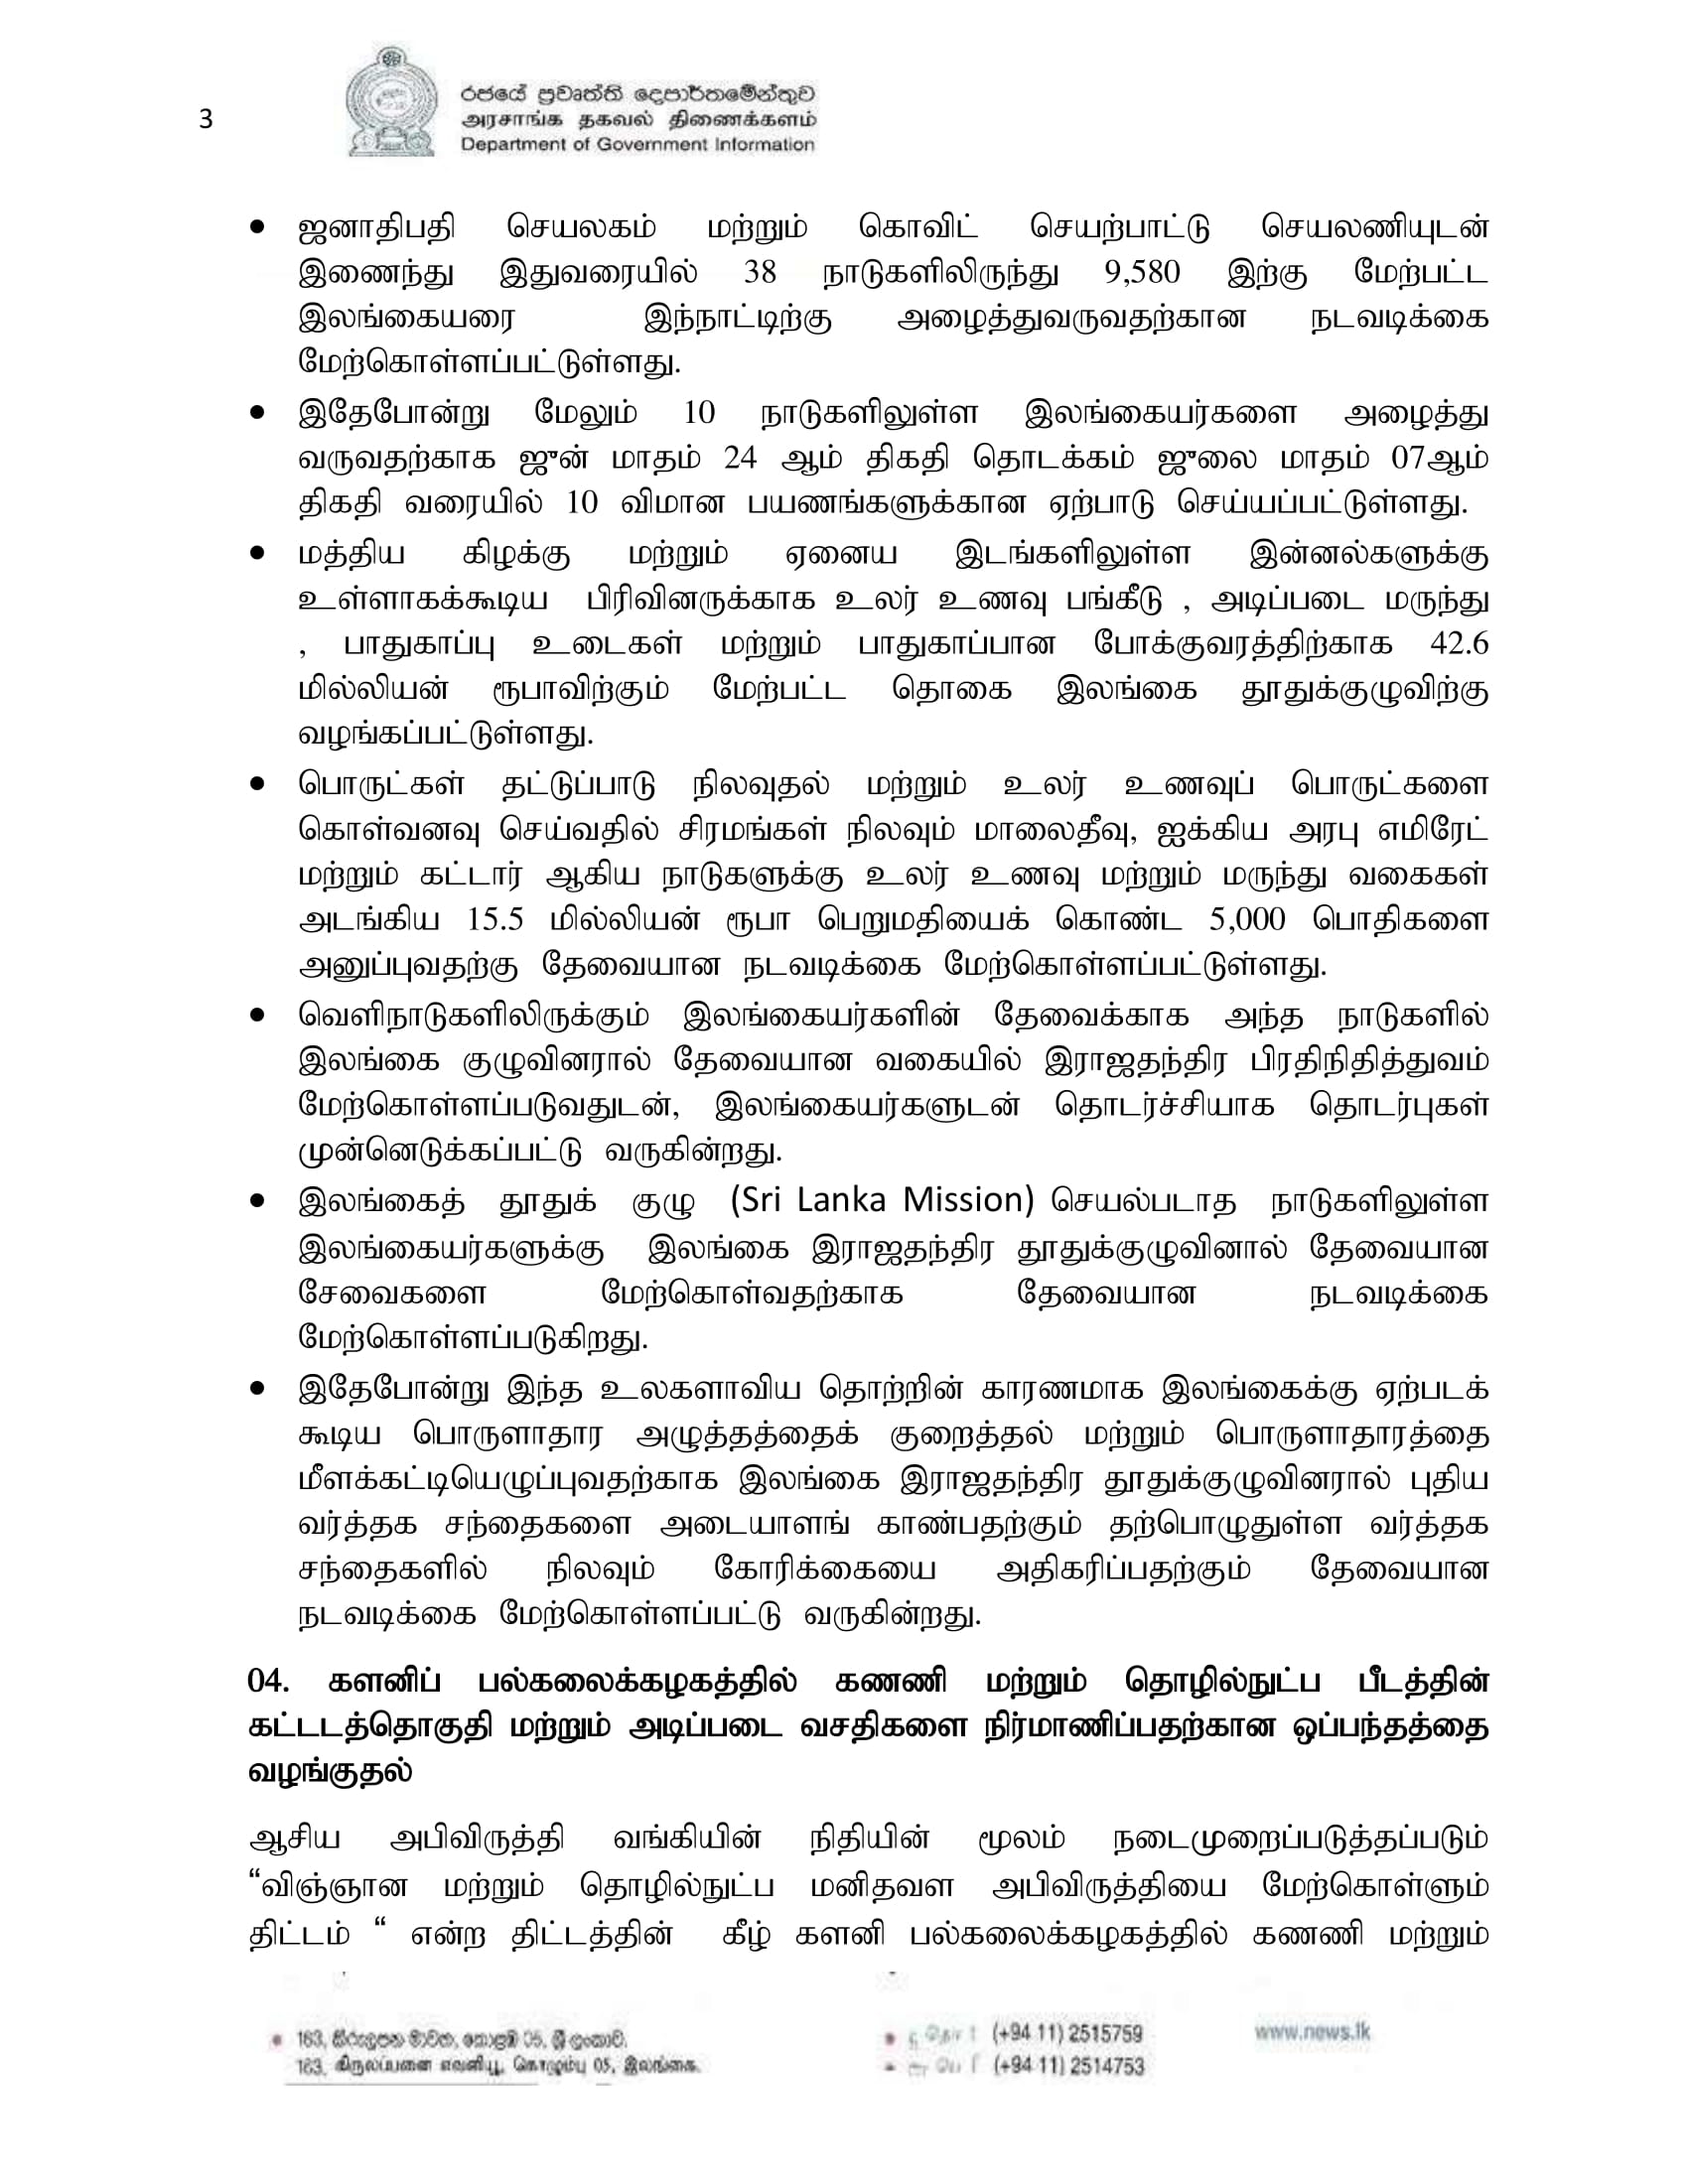 2020.06.24 Cabinet Tamil 1 1 3